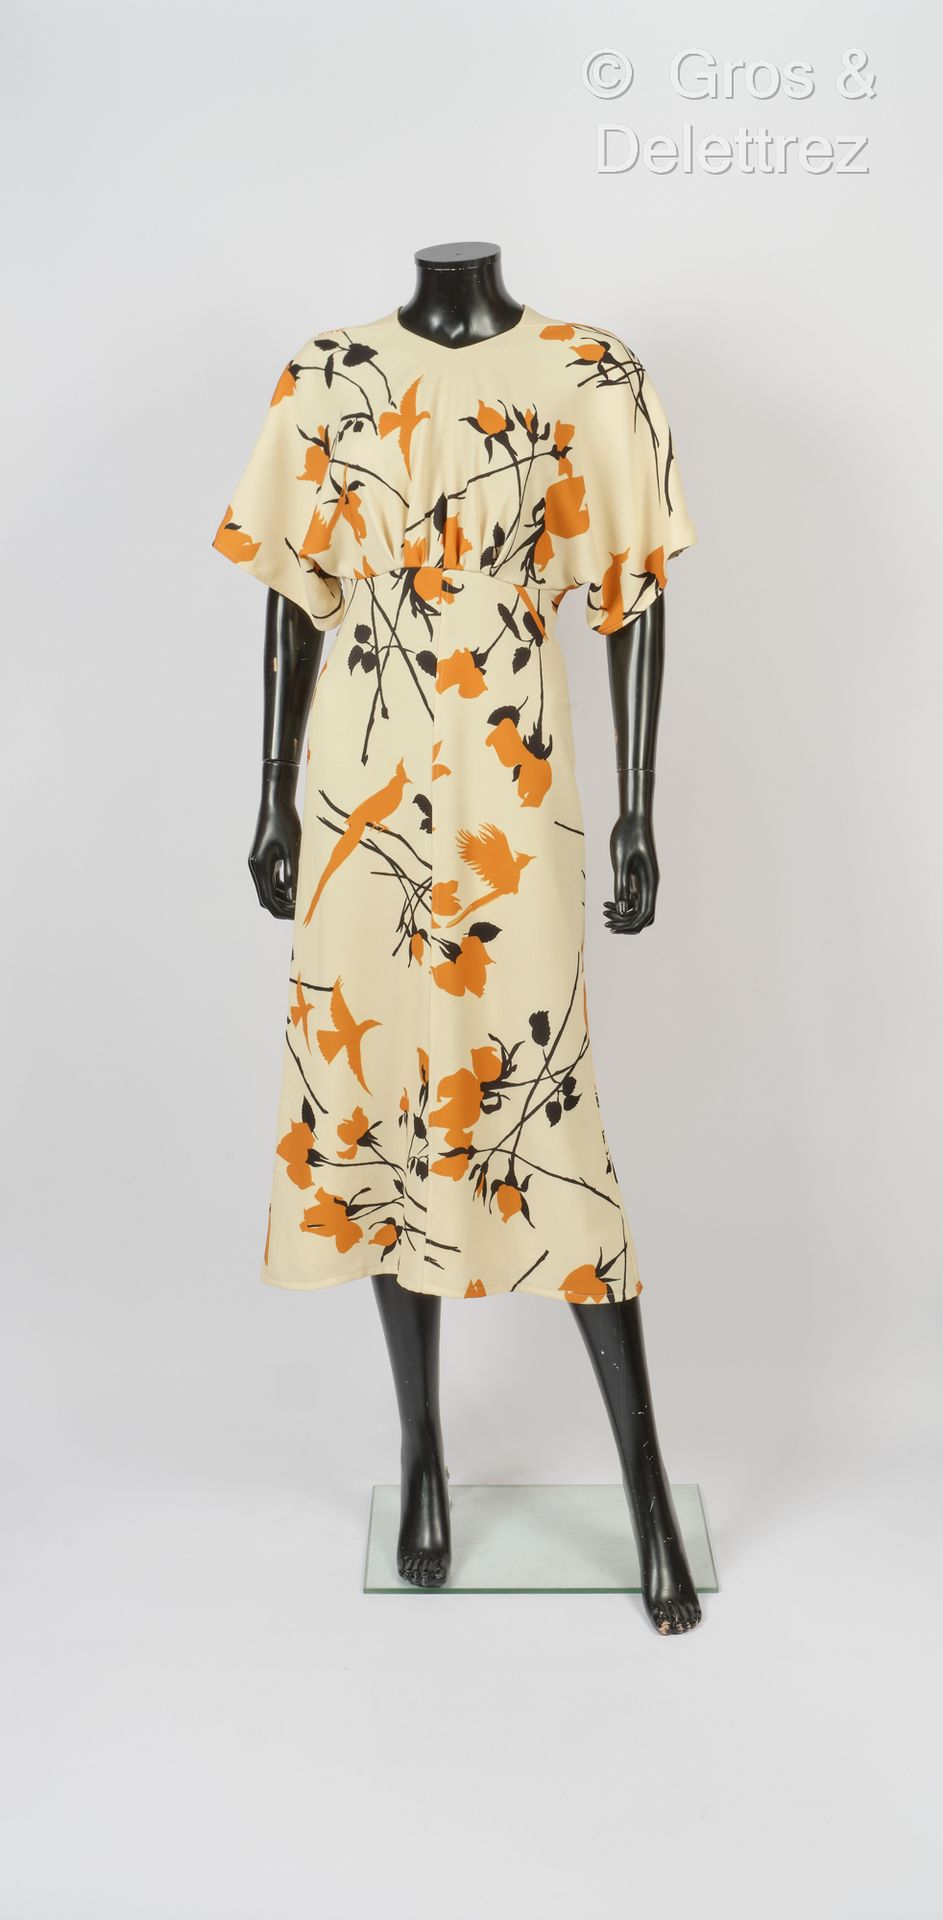 Victoria BECKHAM Spring / Summer 2020 collection
Long dress in vanilla crepe pri&hellip;